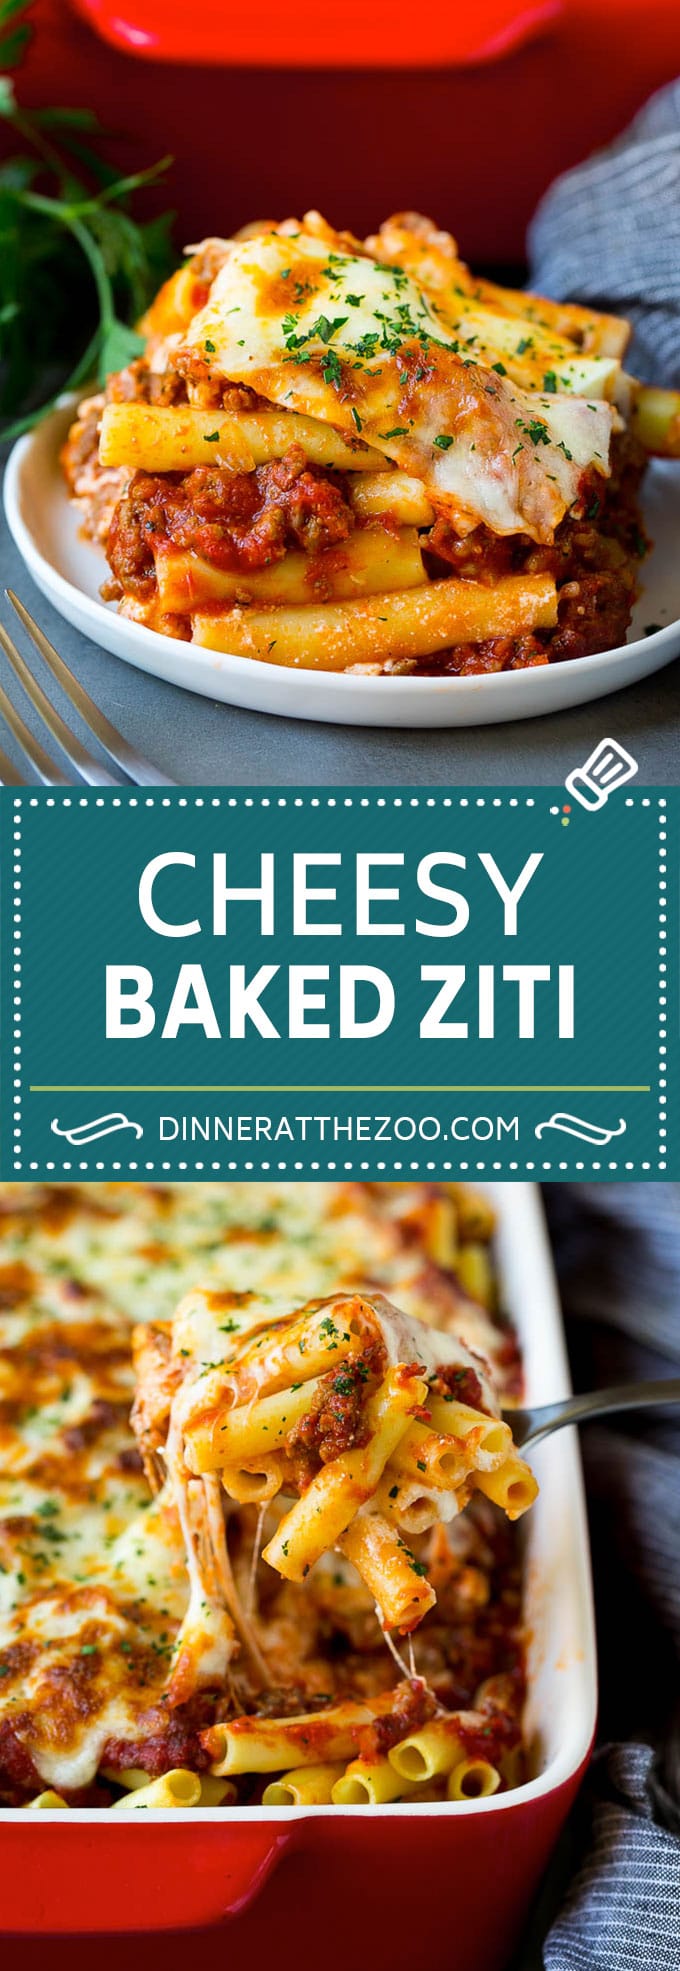 Receta de Ziti al horno |  #pasto #queso #comfortfood #salchicha # cena #dinneratthezoo